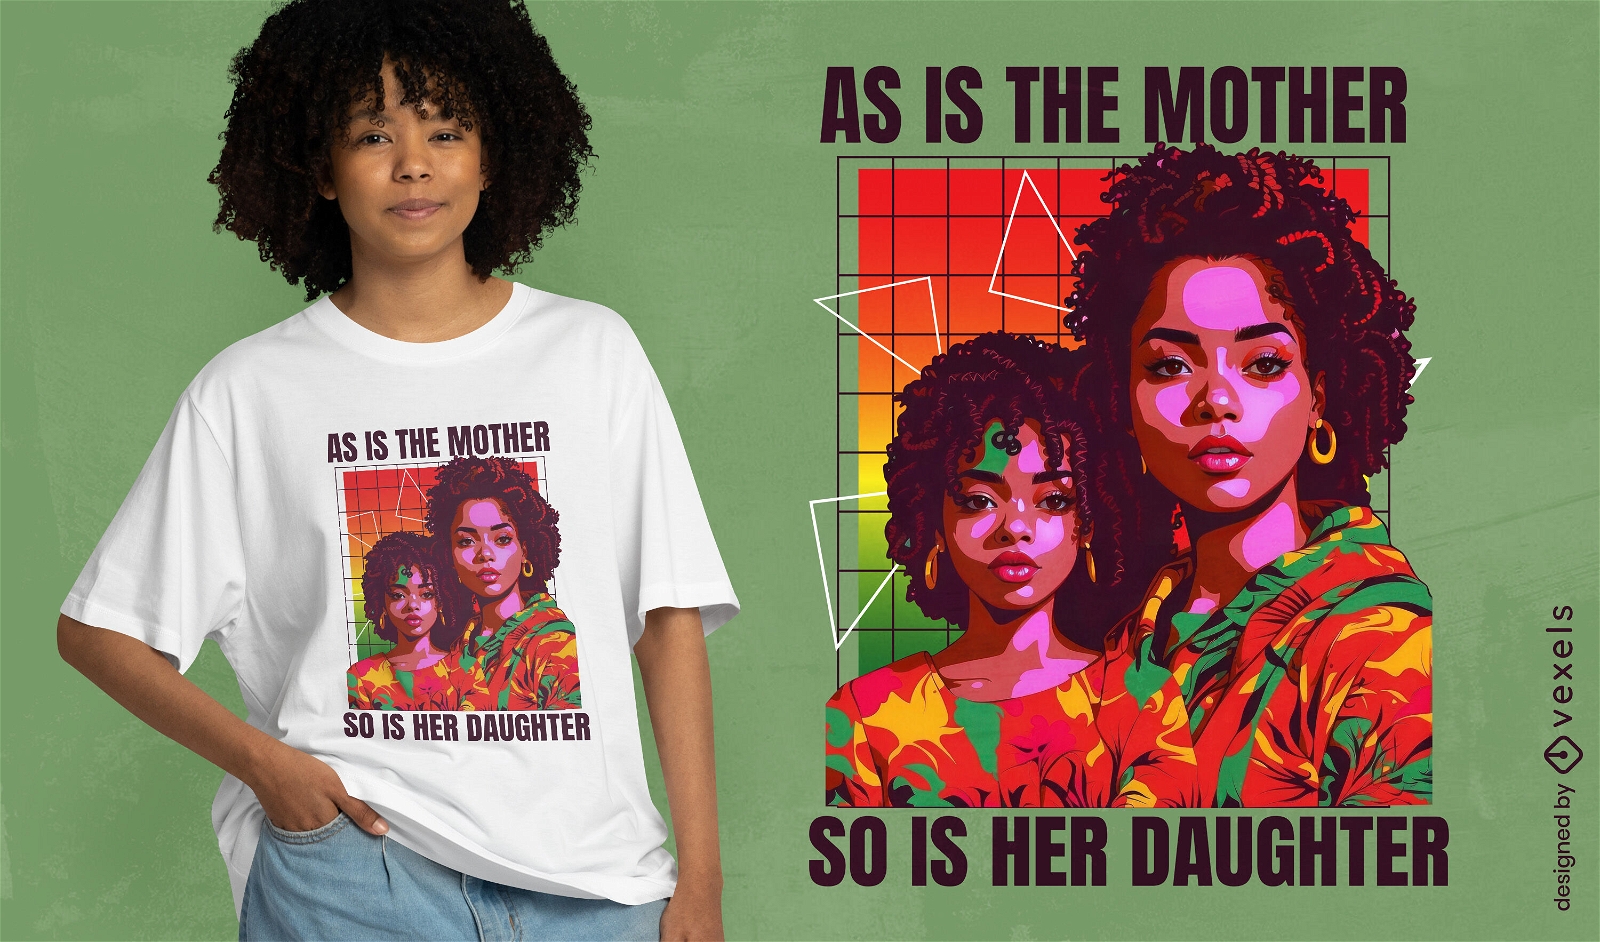 Diseño de camiseta con cita inspiradora de madre e hija.